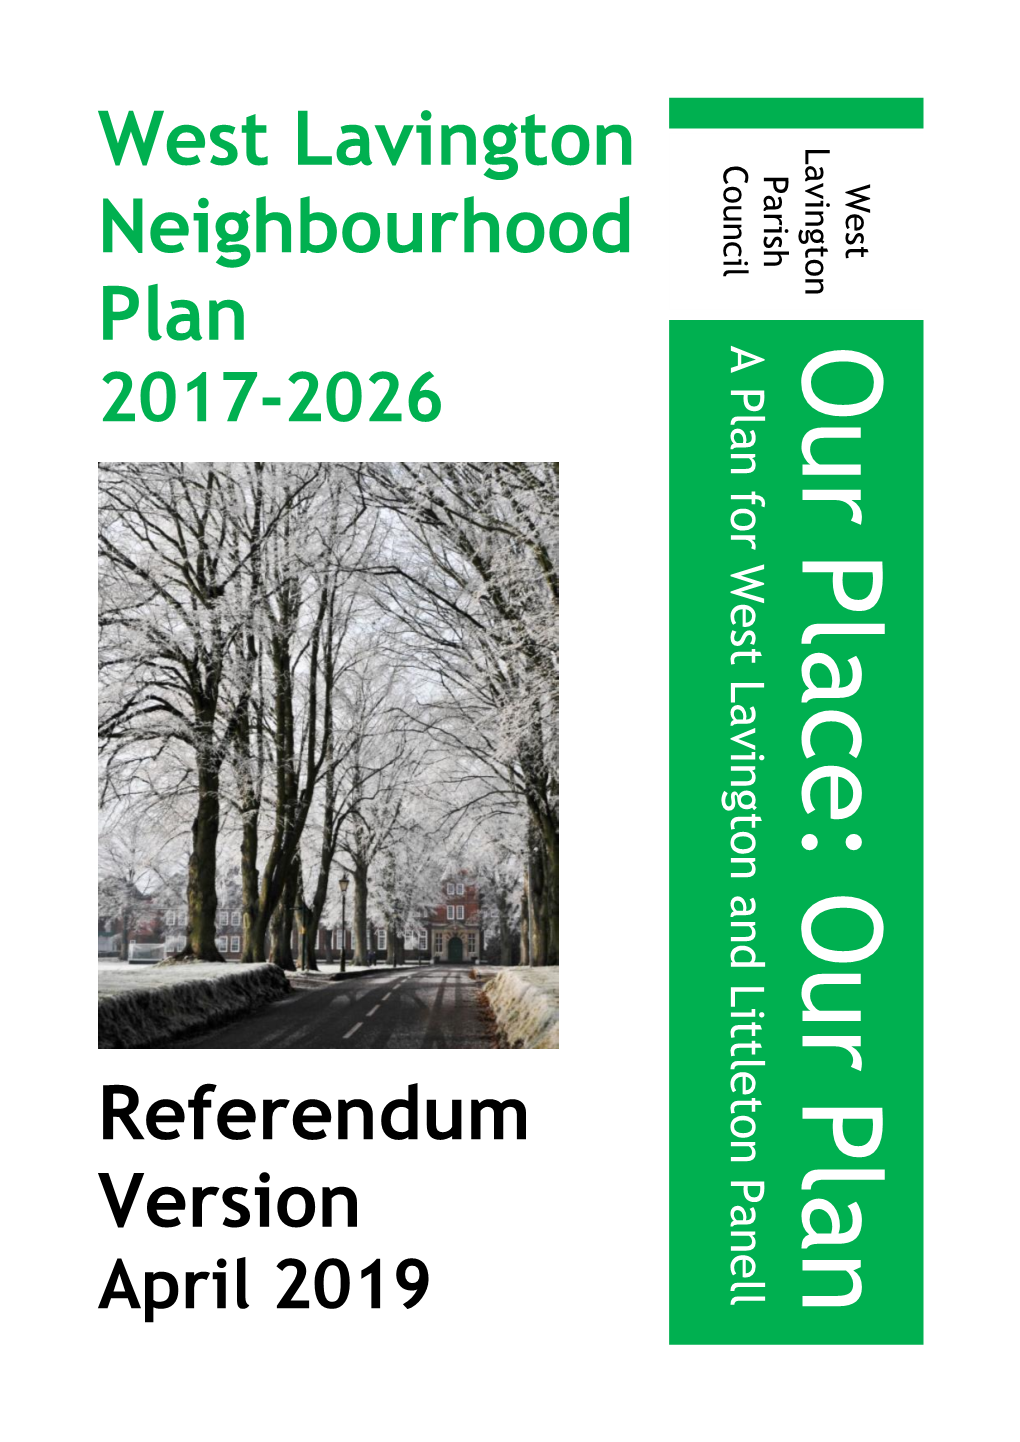 West Lavington Neighbourhood Plan - Referendum Version (Final Plan) West Lavington Neighbourhood Plan 2017-2026